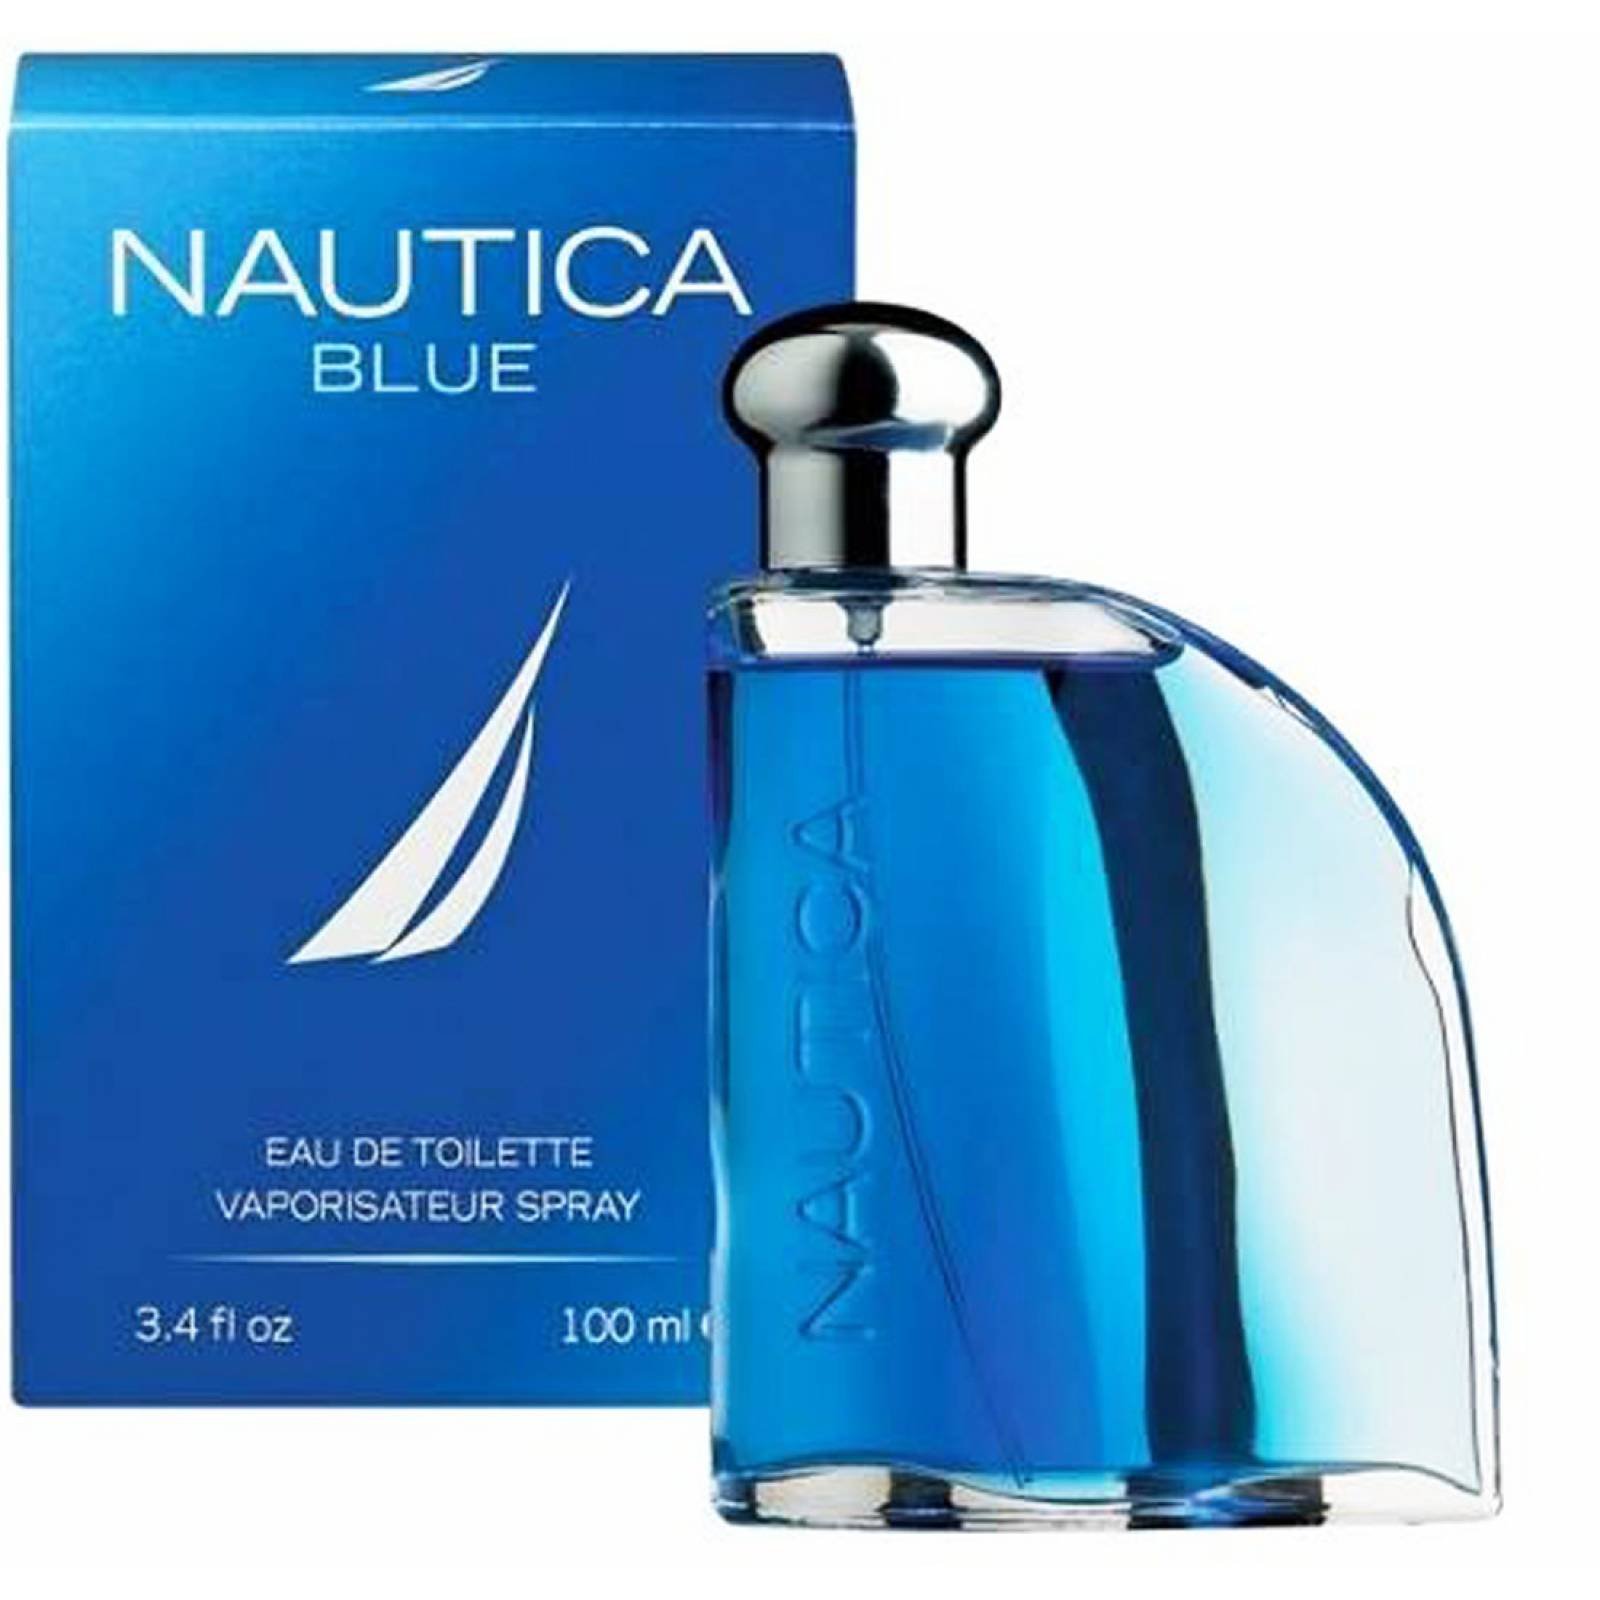 blue nautica voyage